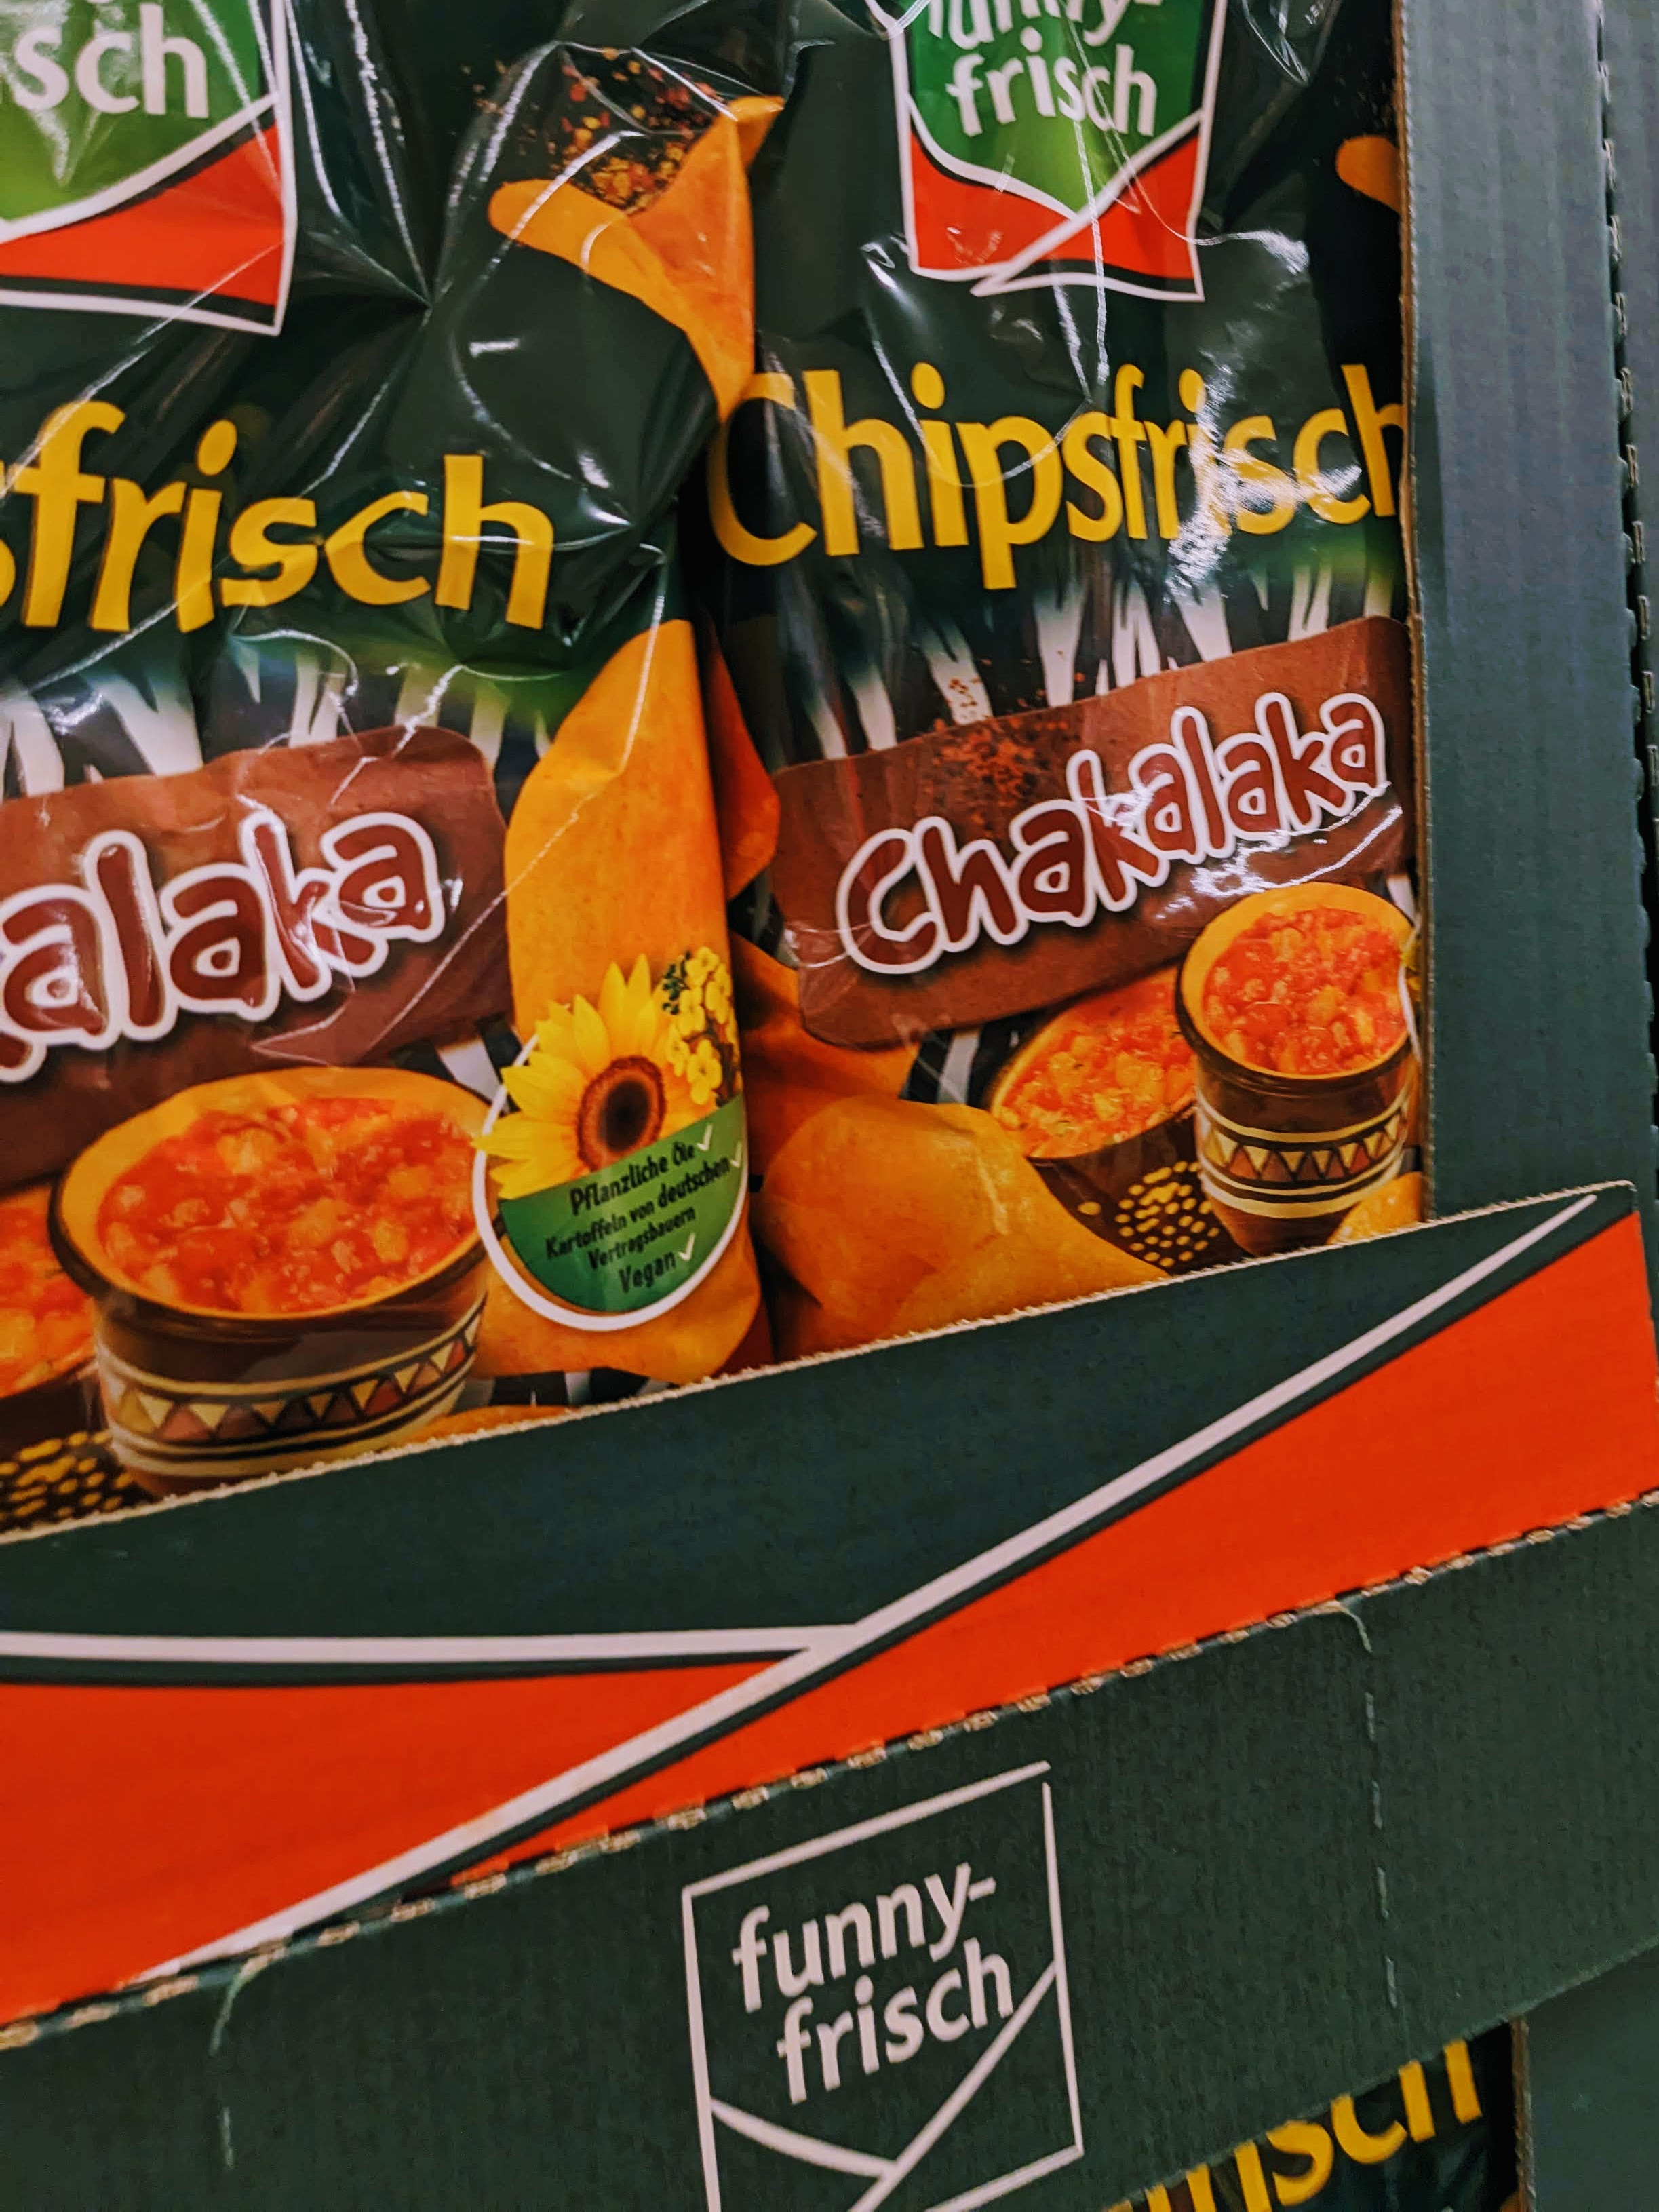 A pack of 'Chakalaka' flavoured crisps.